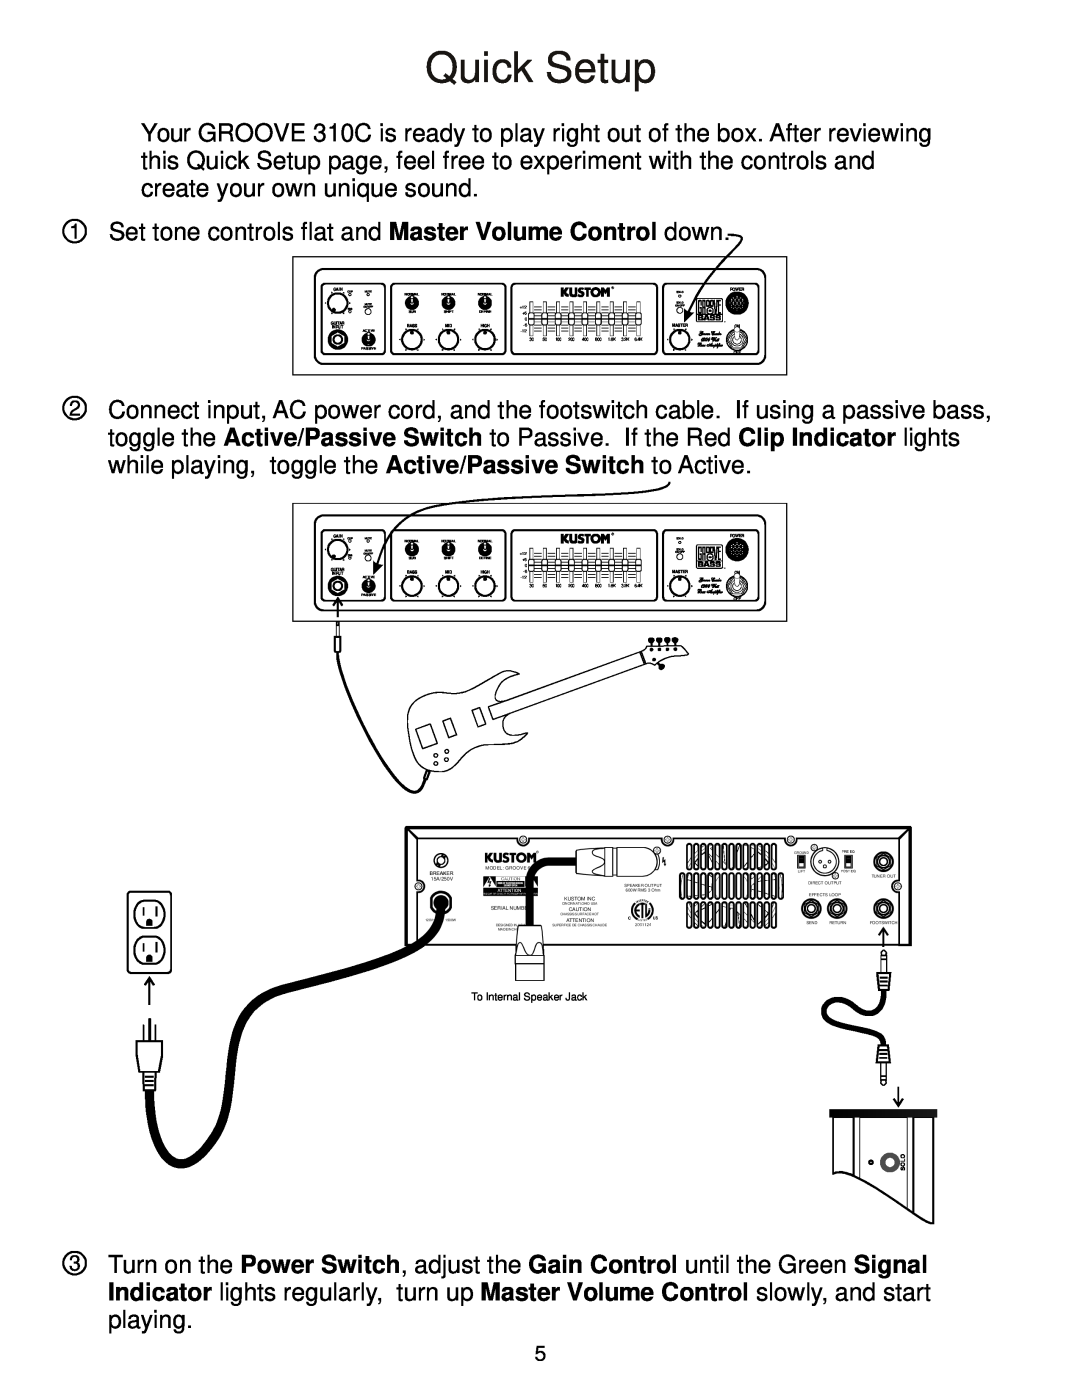 Kustom GROOVE 310C owner manual Quick Setup, To Internal Speaker Jack 